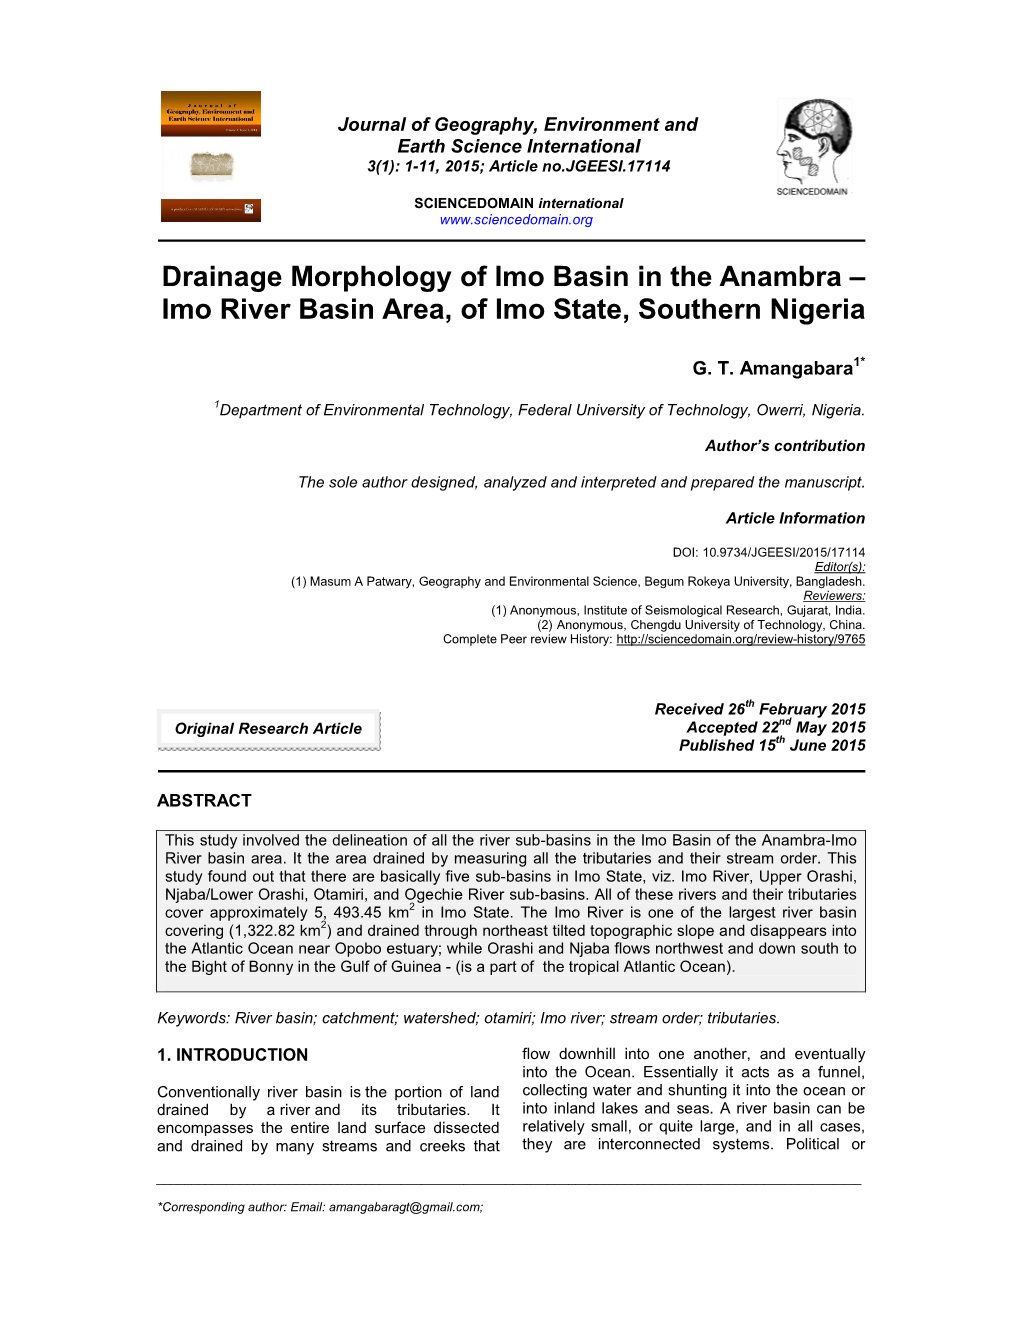 Imo River Basin Area, of Imo State, Southern Nigeria